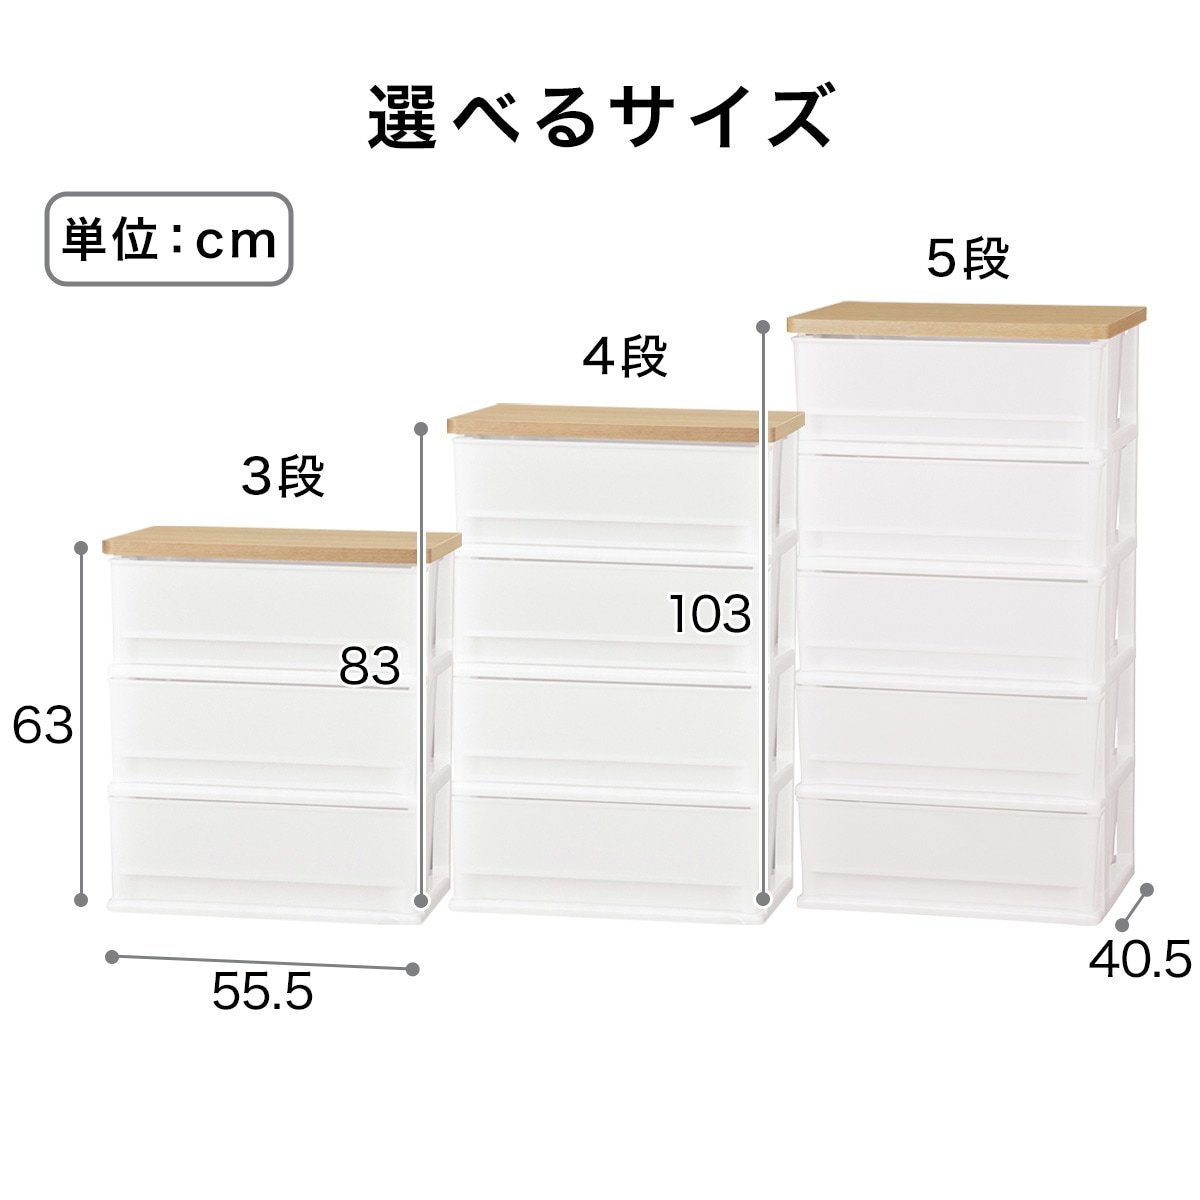  wood grain tabletop chest 5 step (FD-W5D light brown ) width 55.5× depth 40.5× height 103cmnitoli